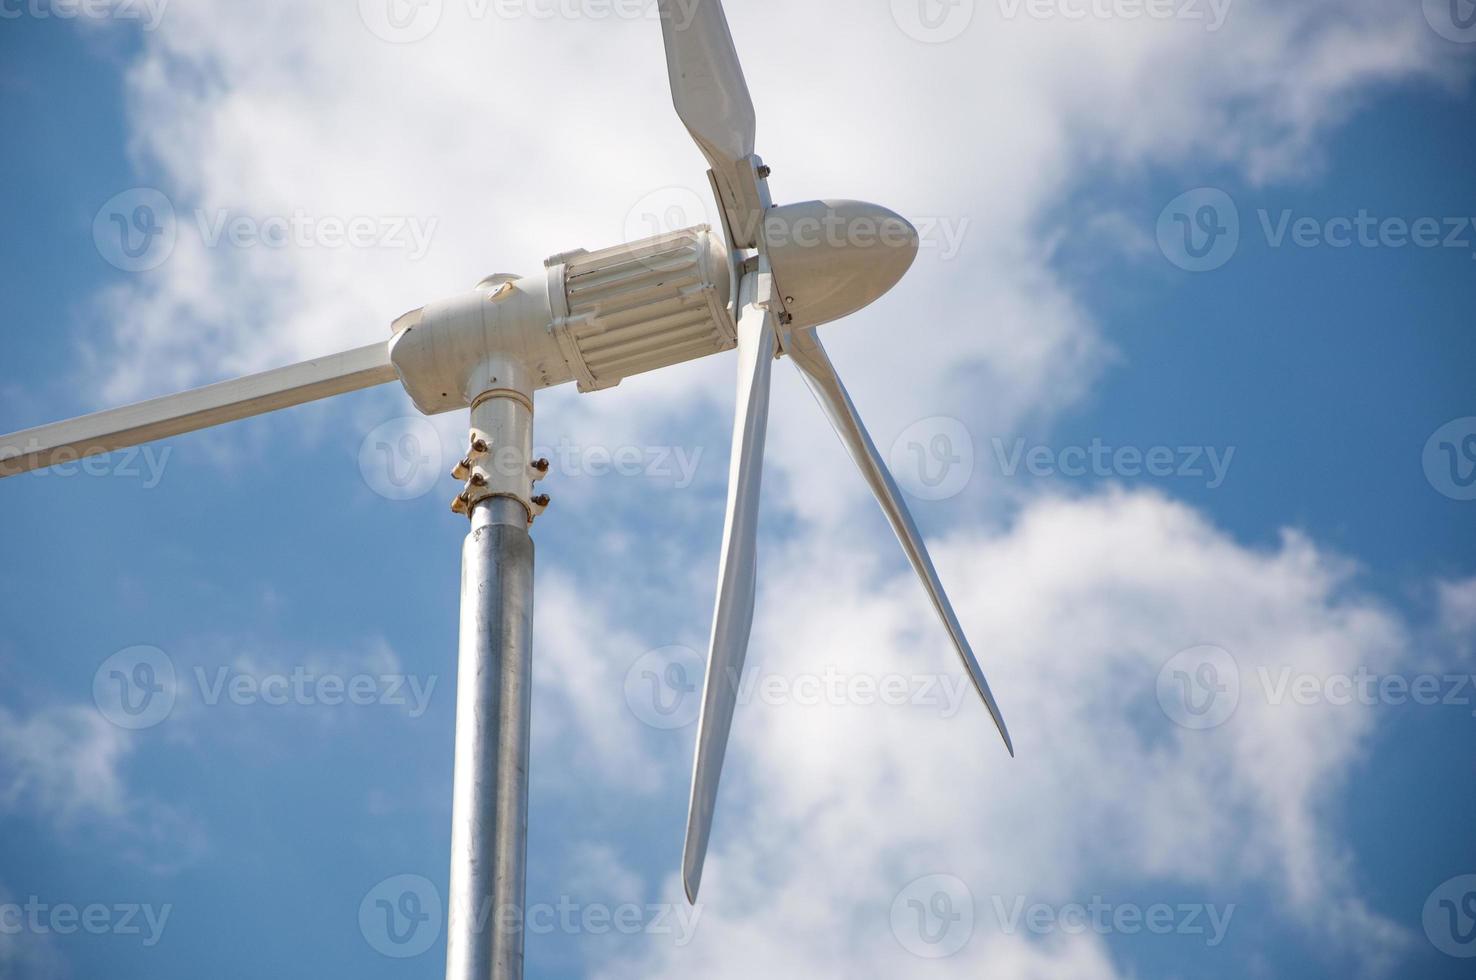 Closeup of wind turbine producing alternative energy photo